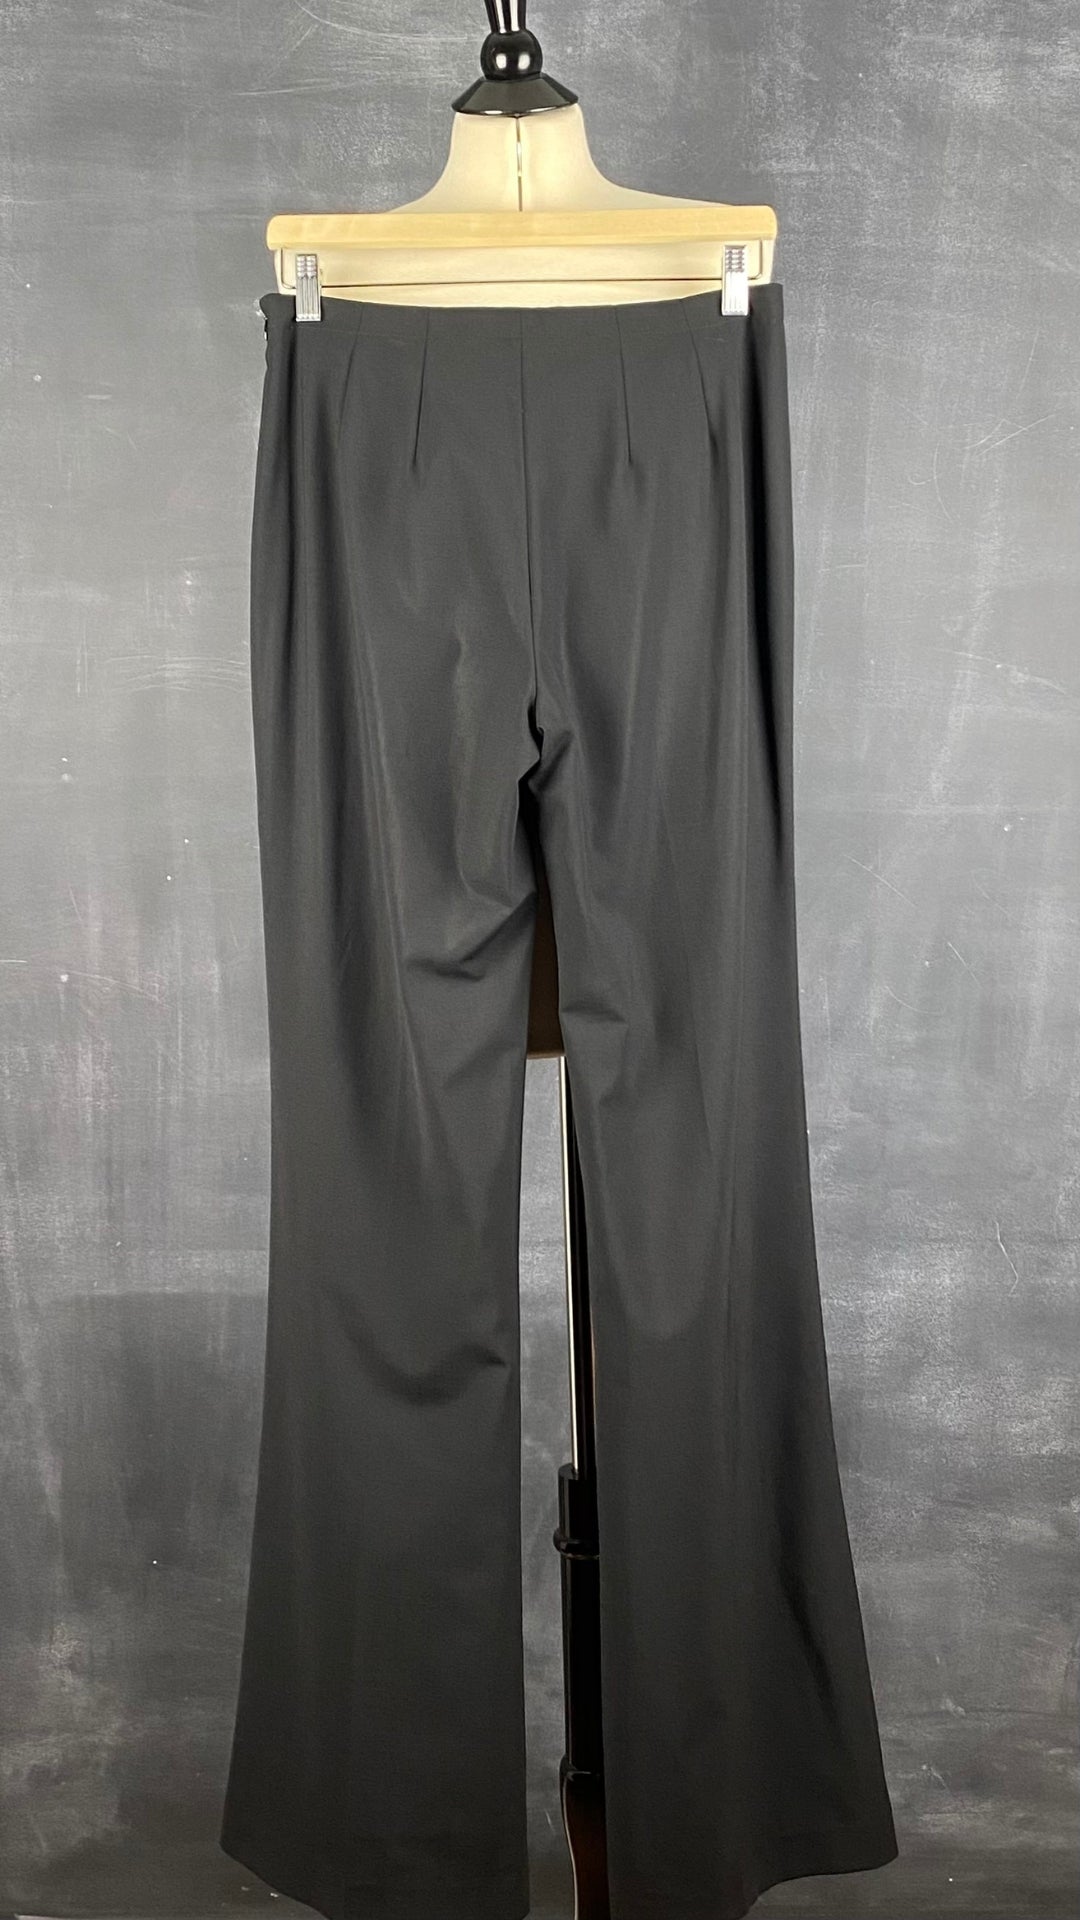 Pantalon noir jambe ample en ultra fin lainage Theory, taille 6. Vue de dos.